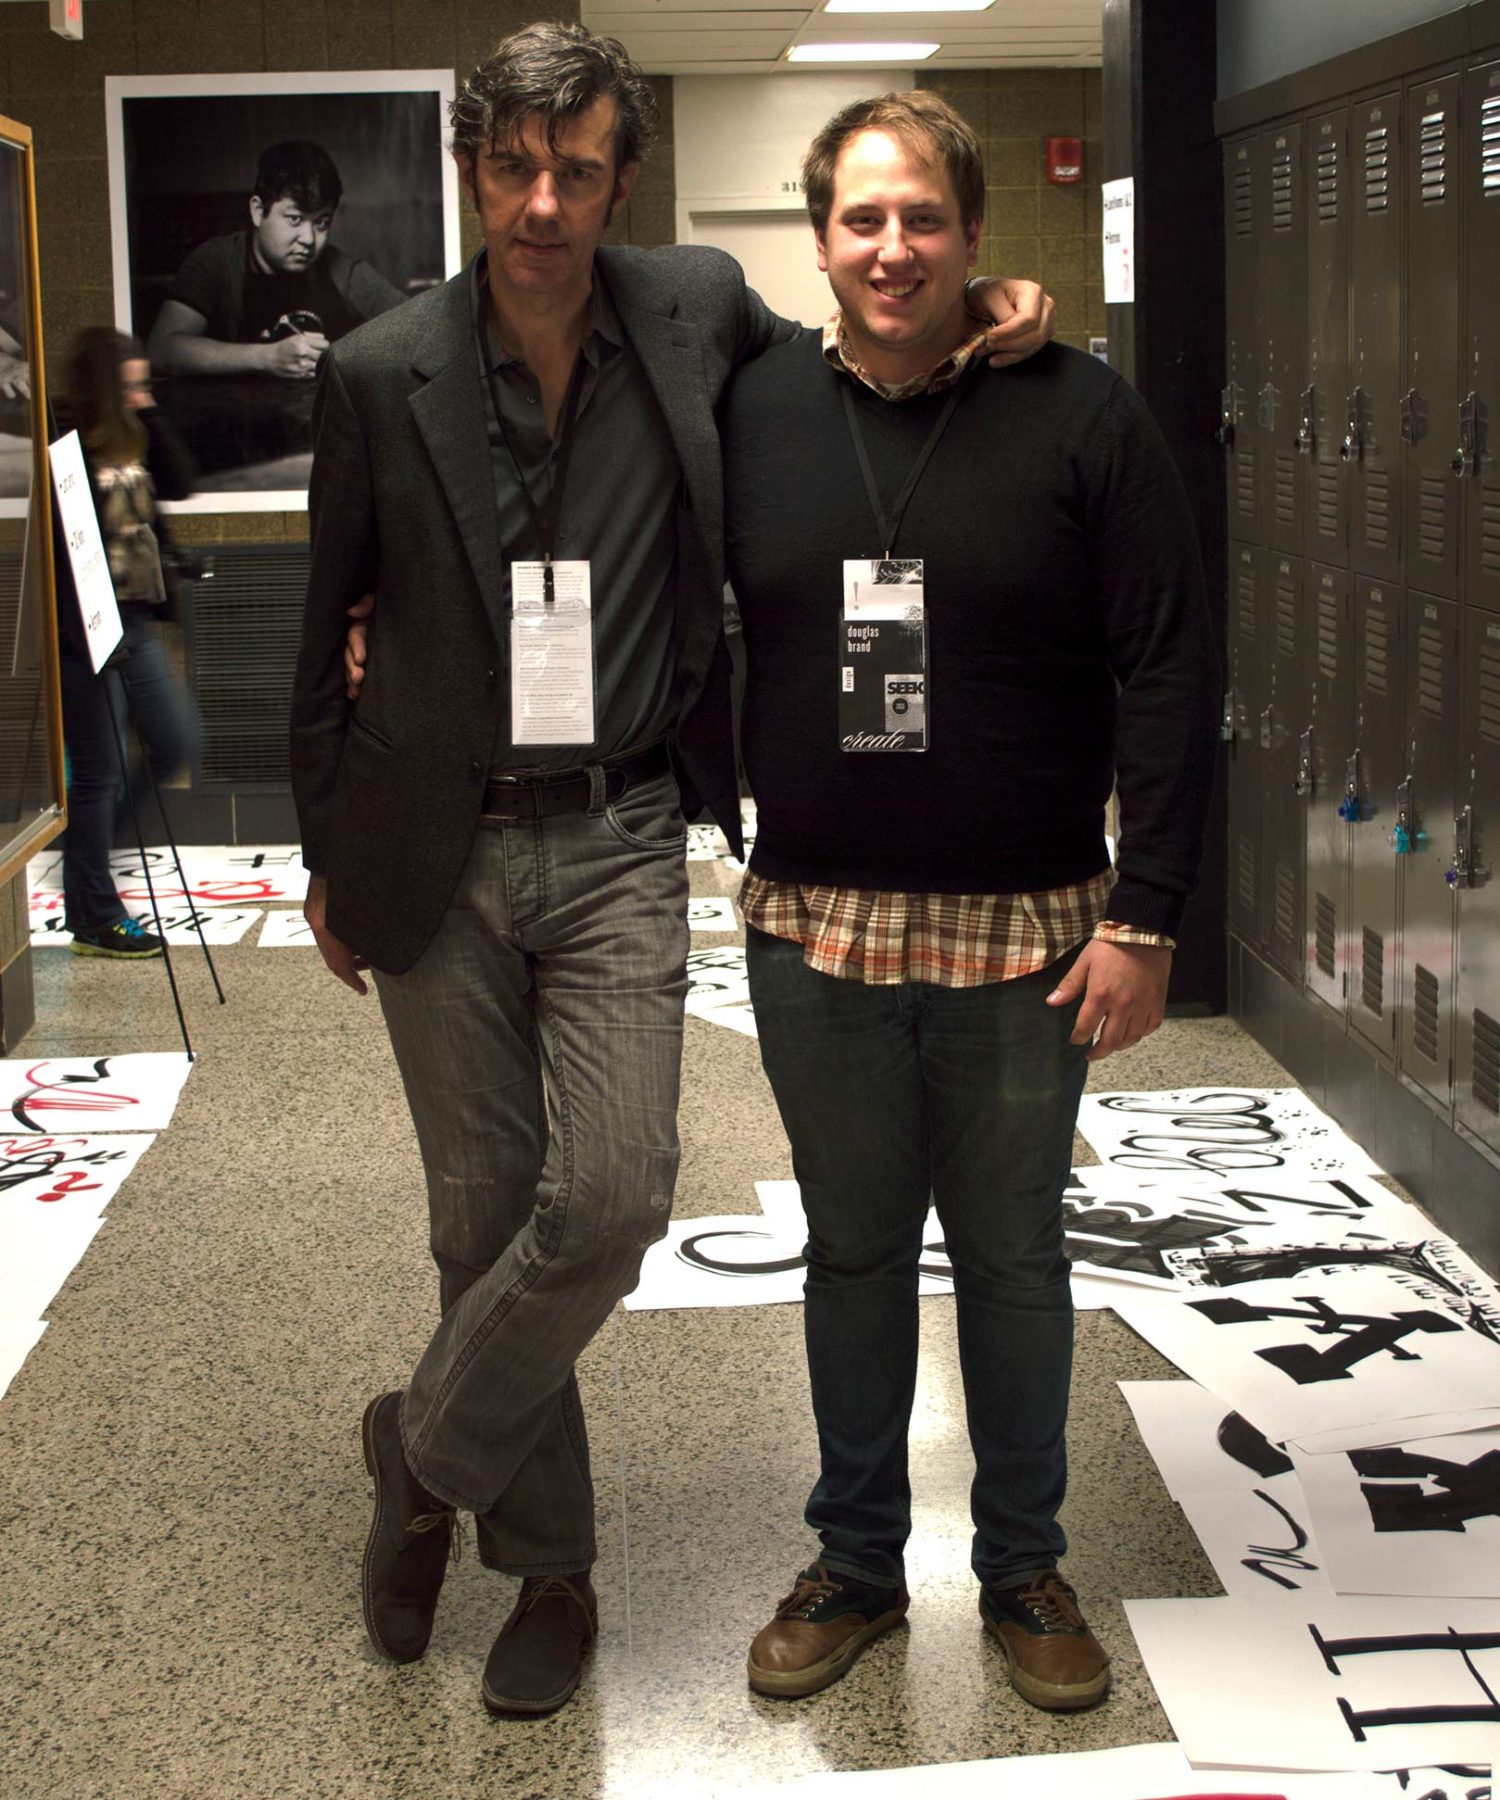 Stefan Sagmeister and then student coordinator, Doug Brand